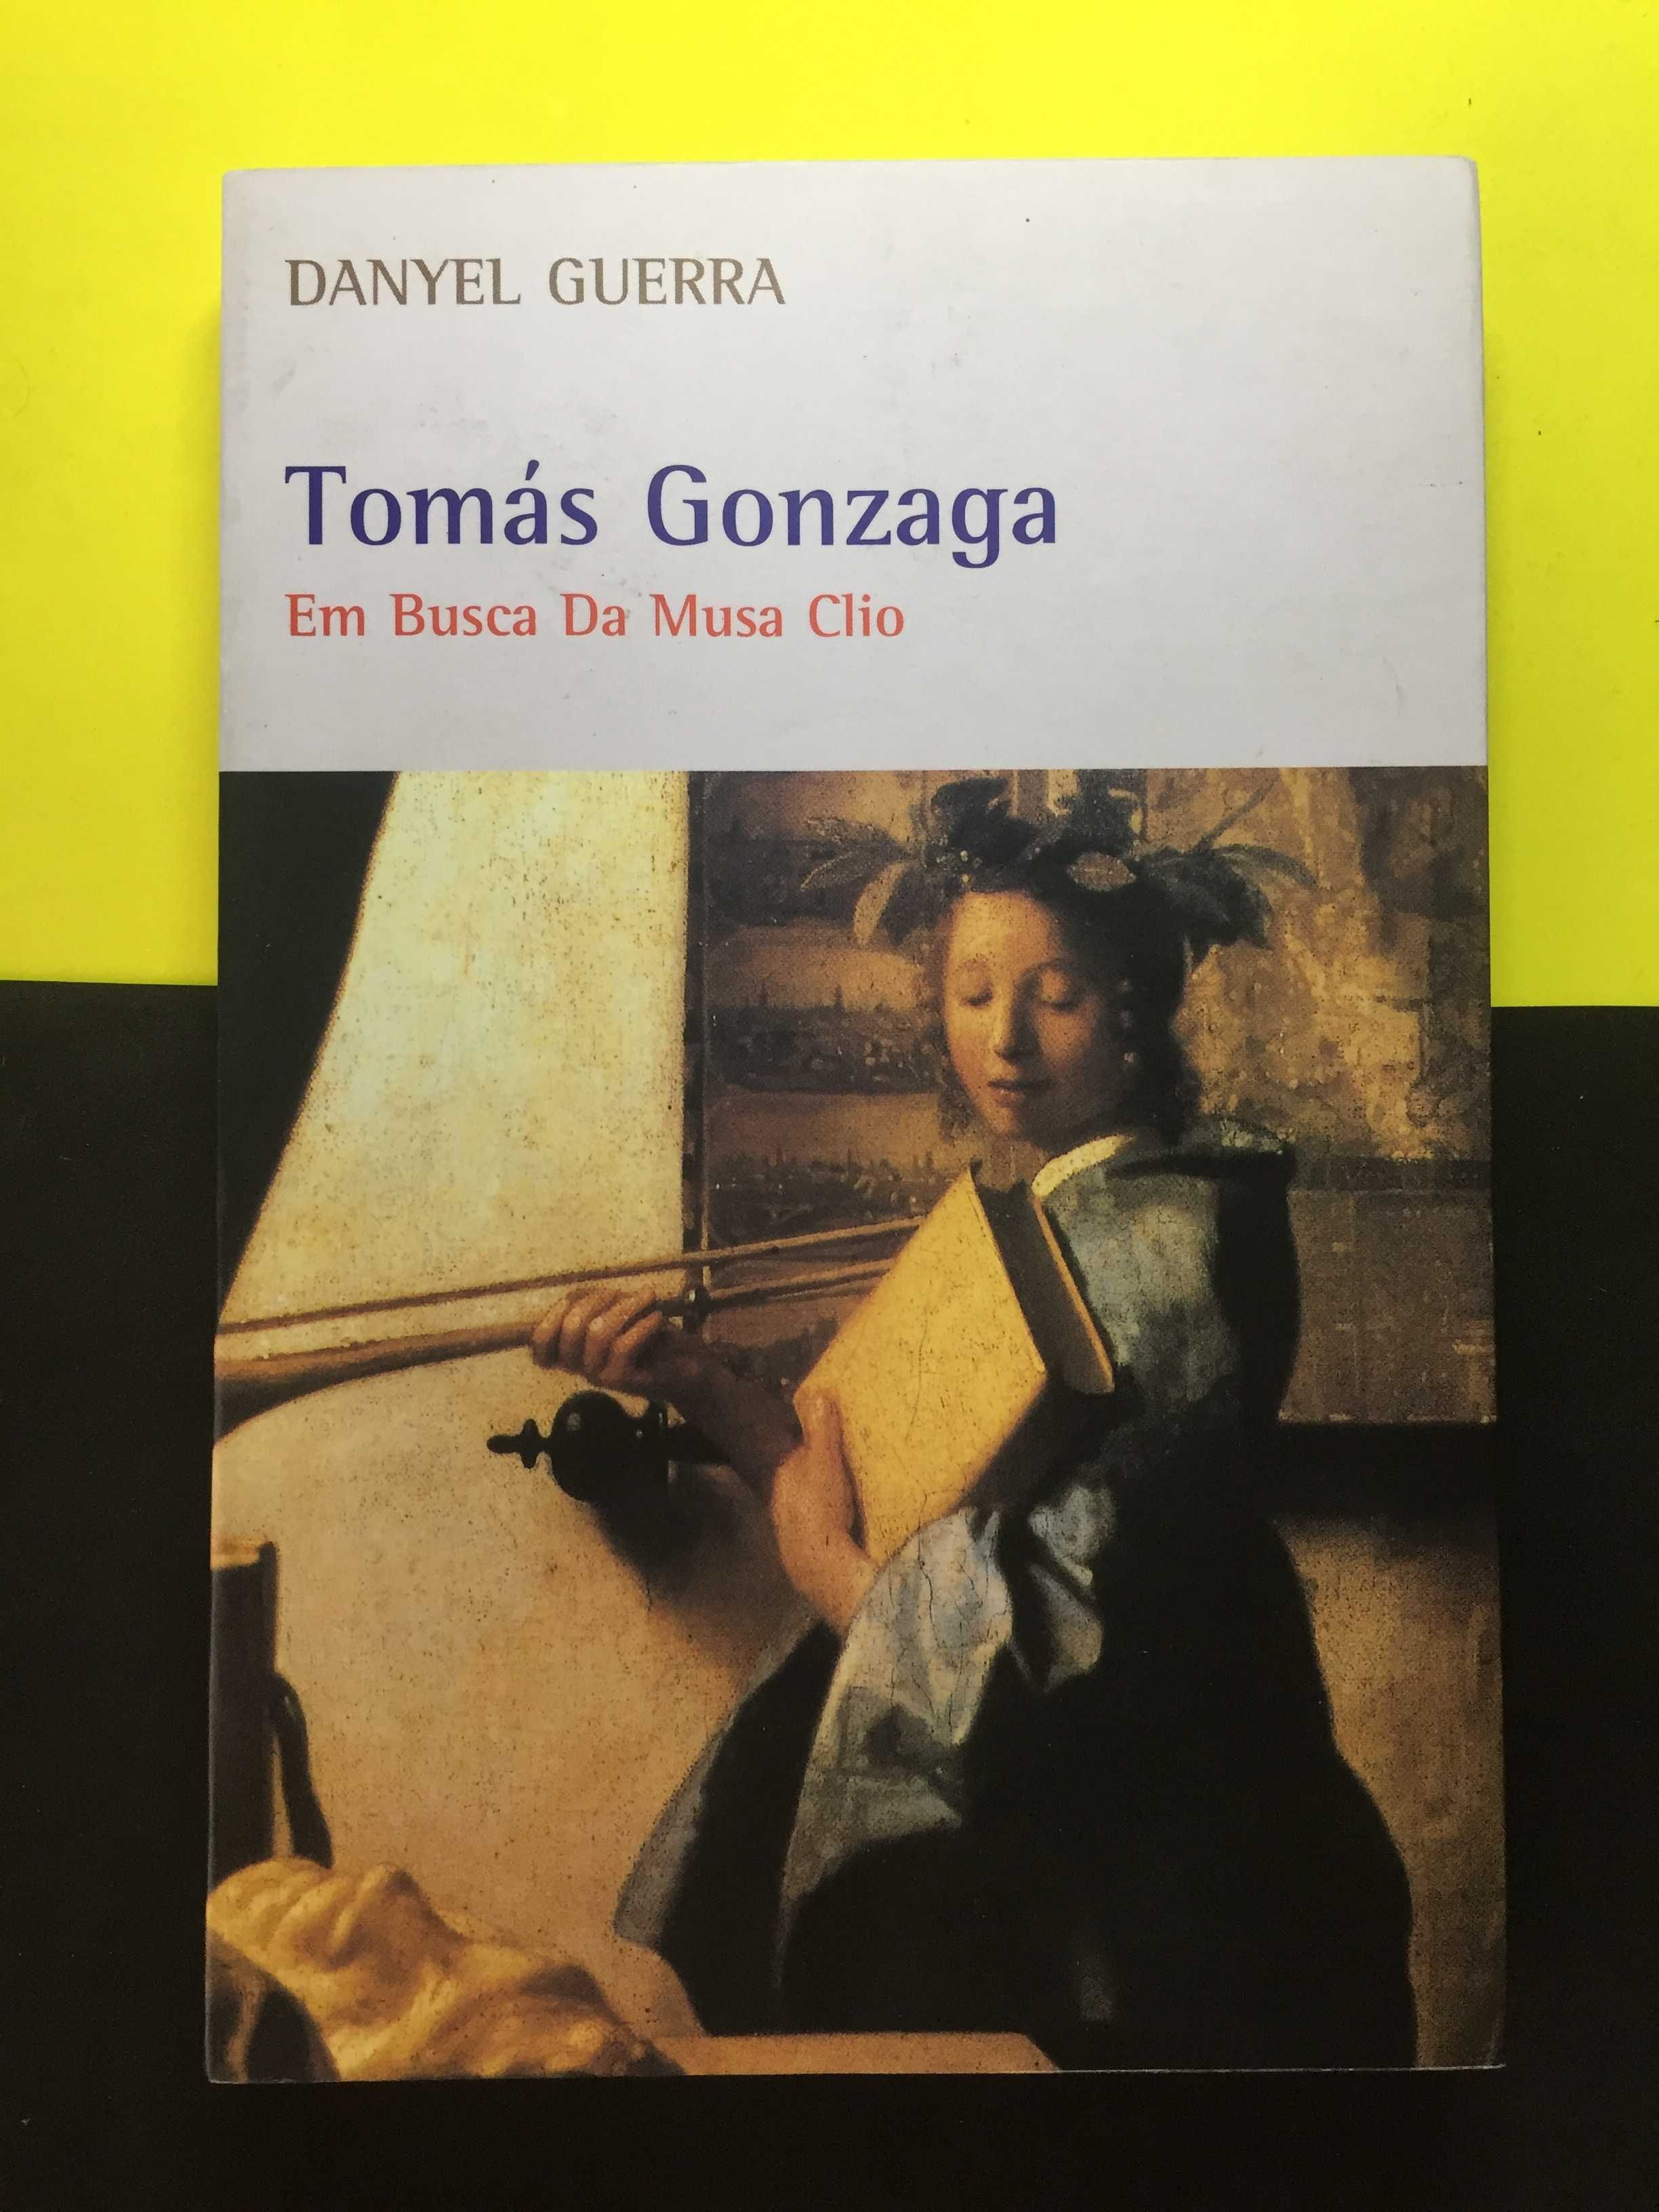 Danyel Guerra - Tomás Gonzaga, em busca da musa clio